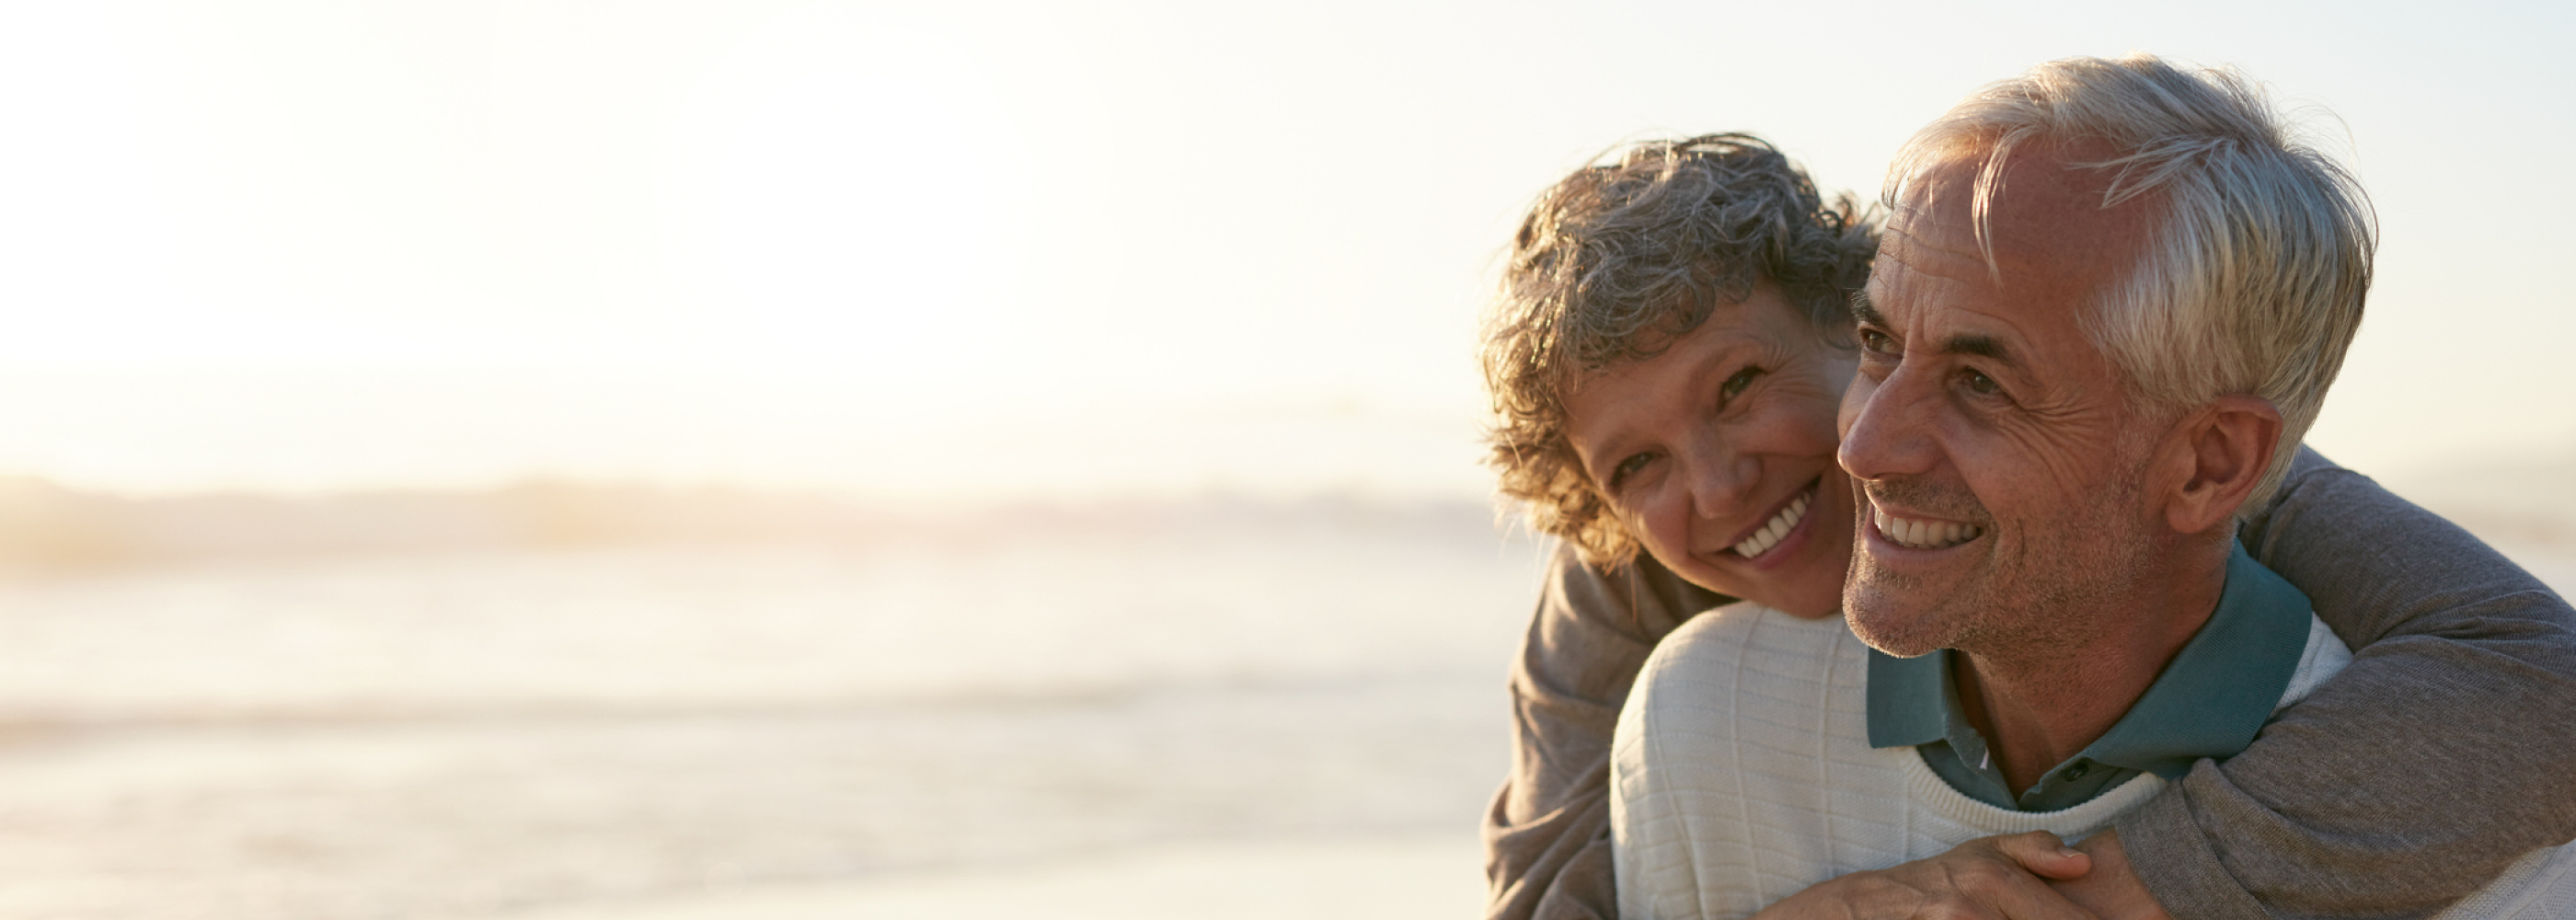 Älteres Paar umarmt sich lachend am Strand.